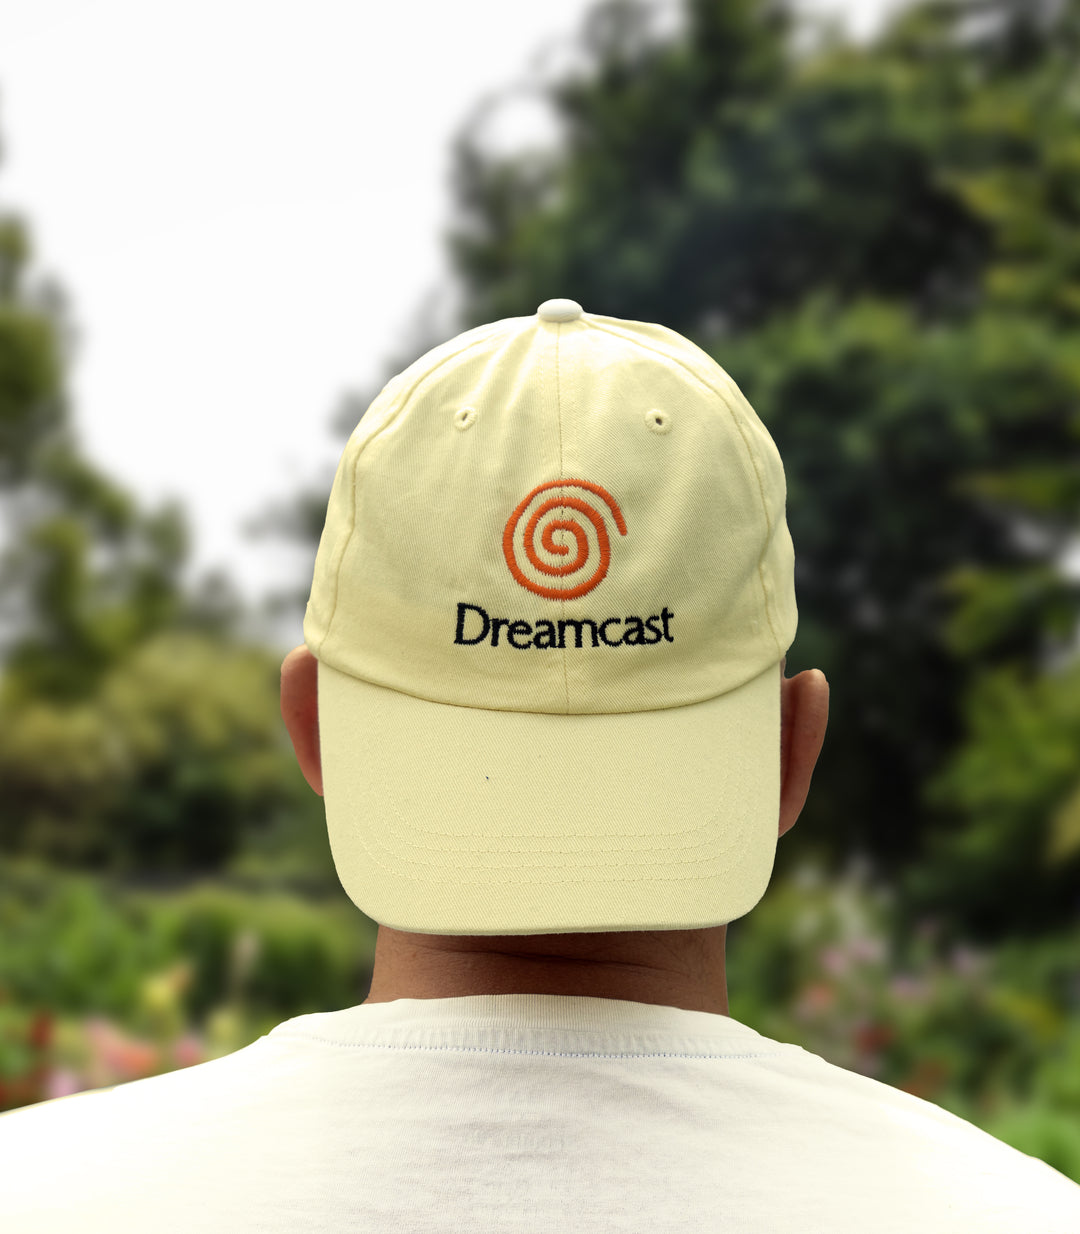 Dreamcast Cap behind